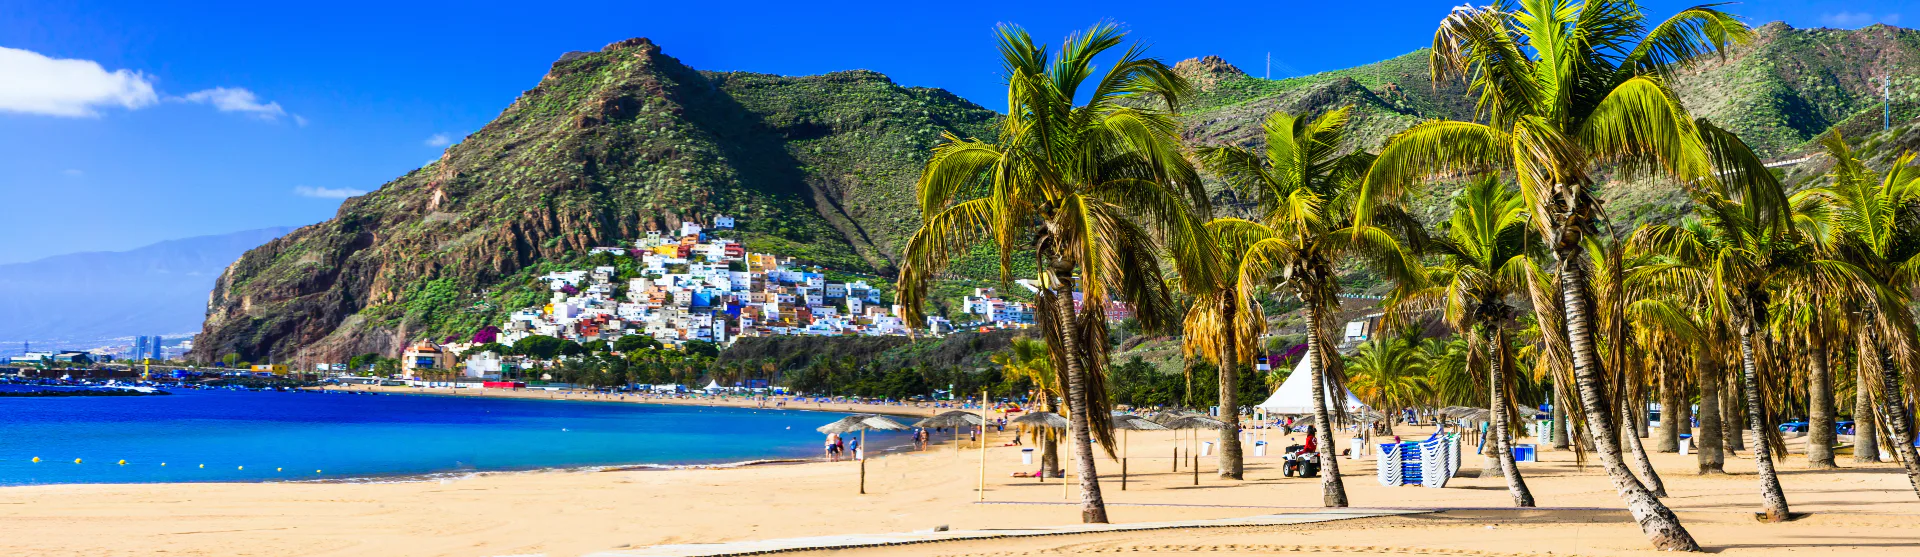 Canary islands cruise